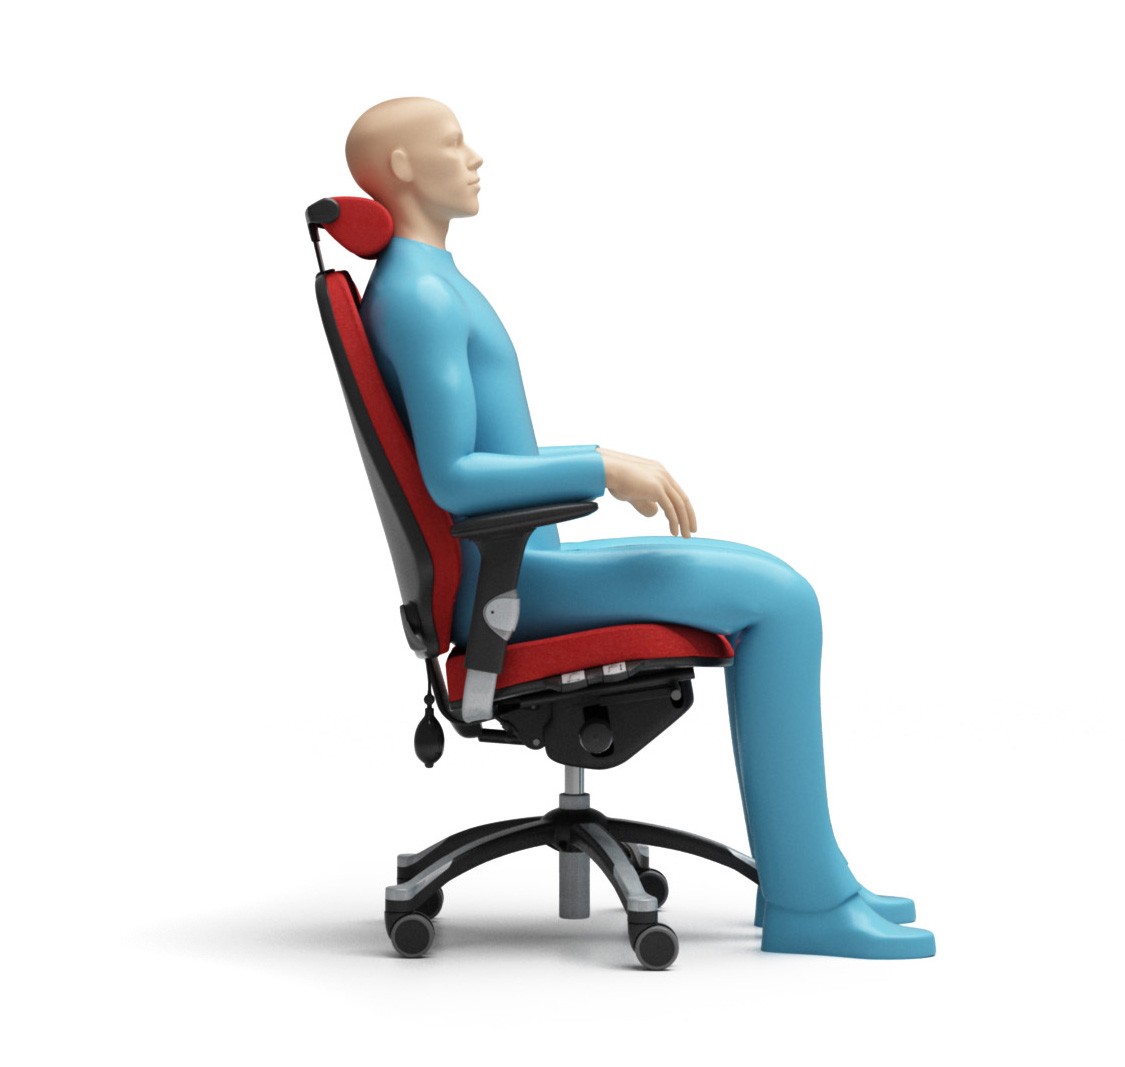 RH chair with default man sitting